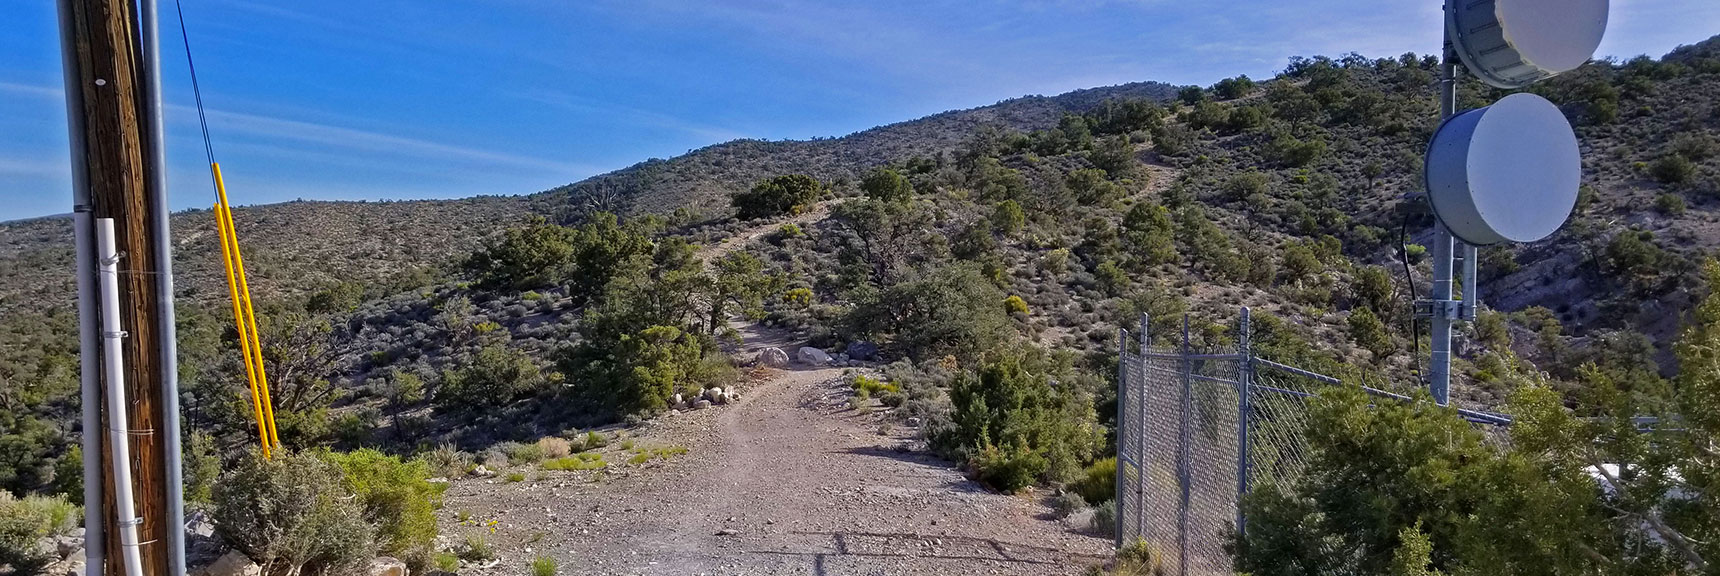 Nice Trail/Roadlet Begins at Rock Barrier Behind Communication Tower | Windy Peak | Rainbow Mountain Wilderness, Nevada